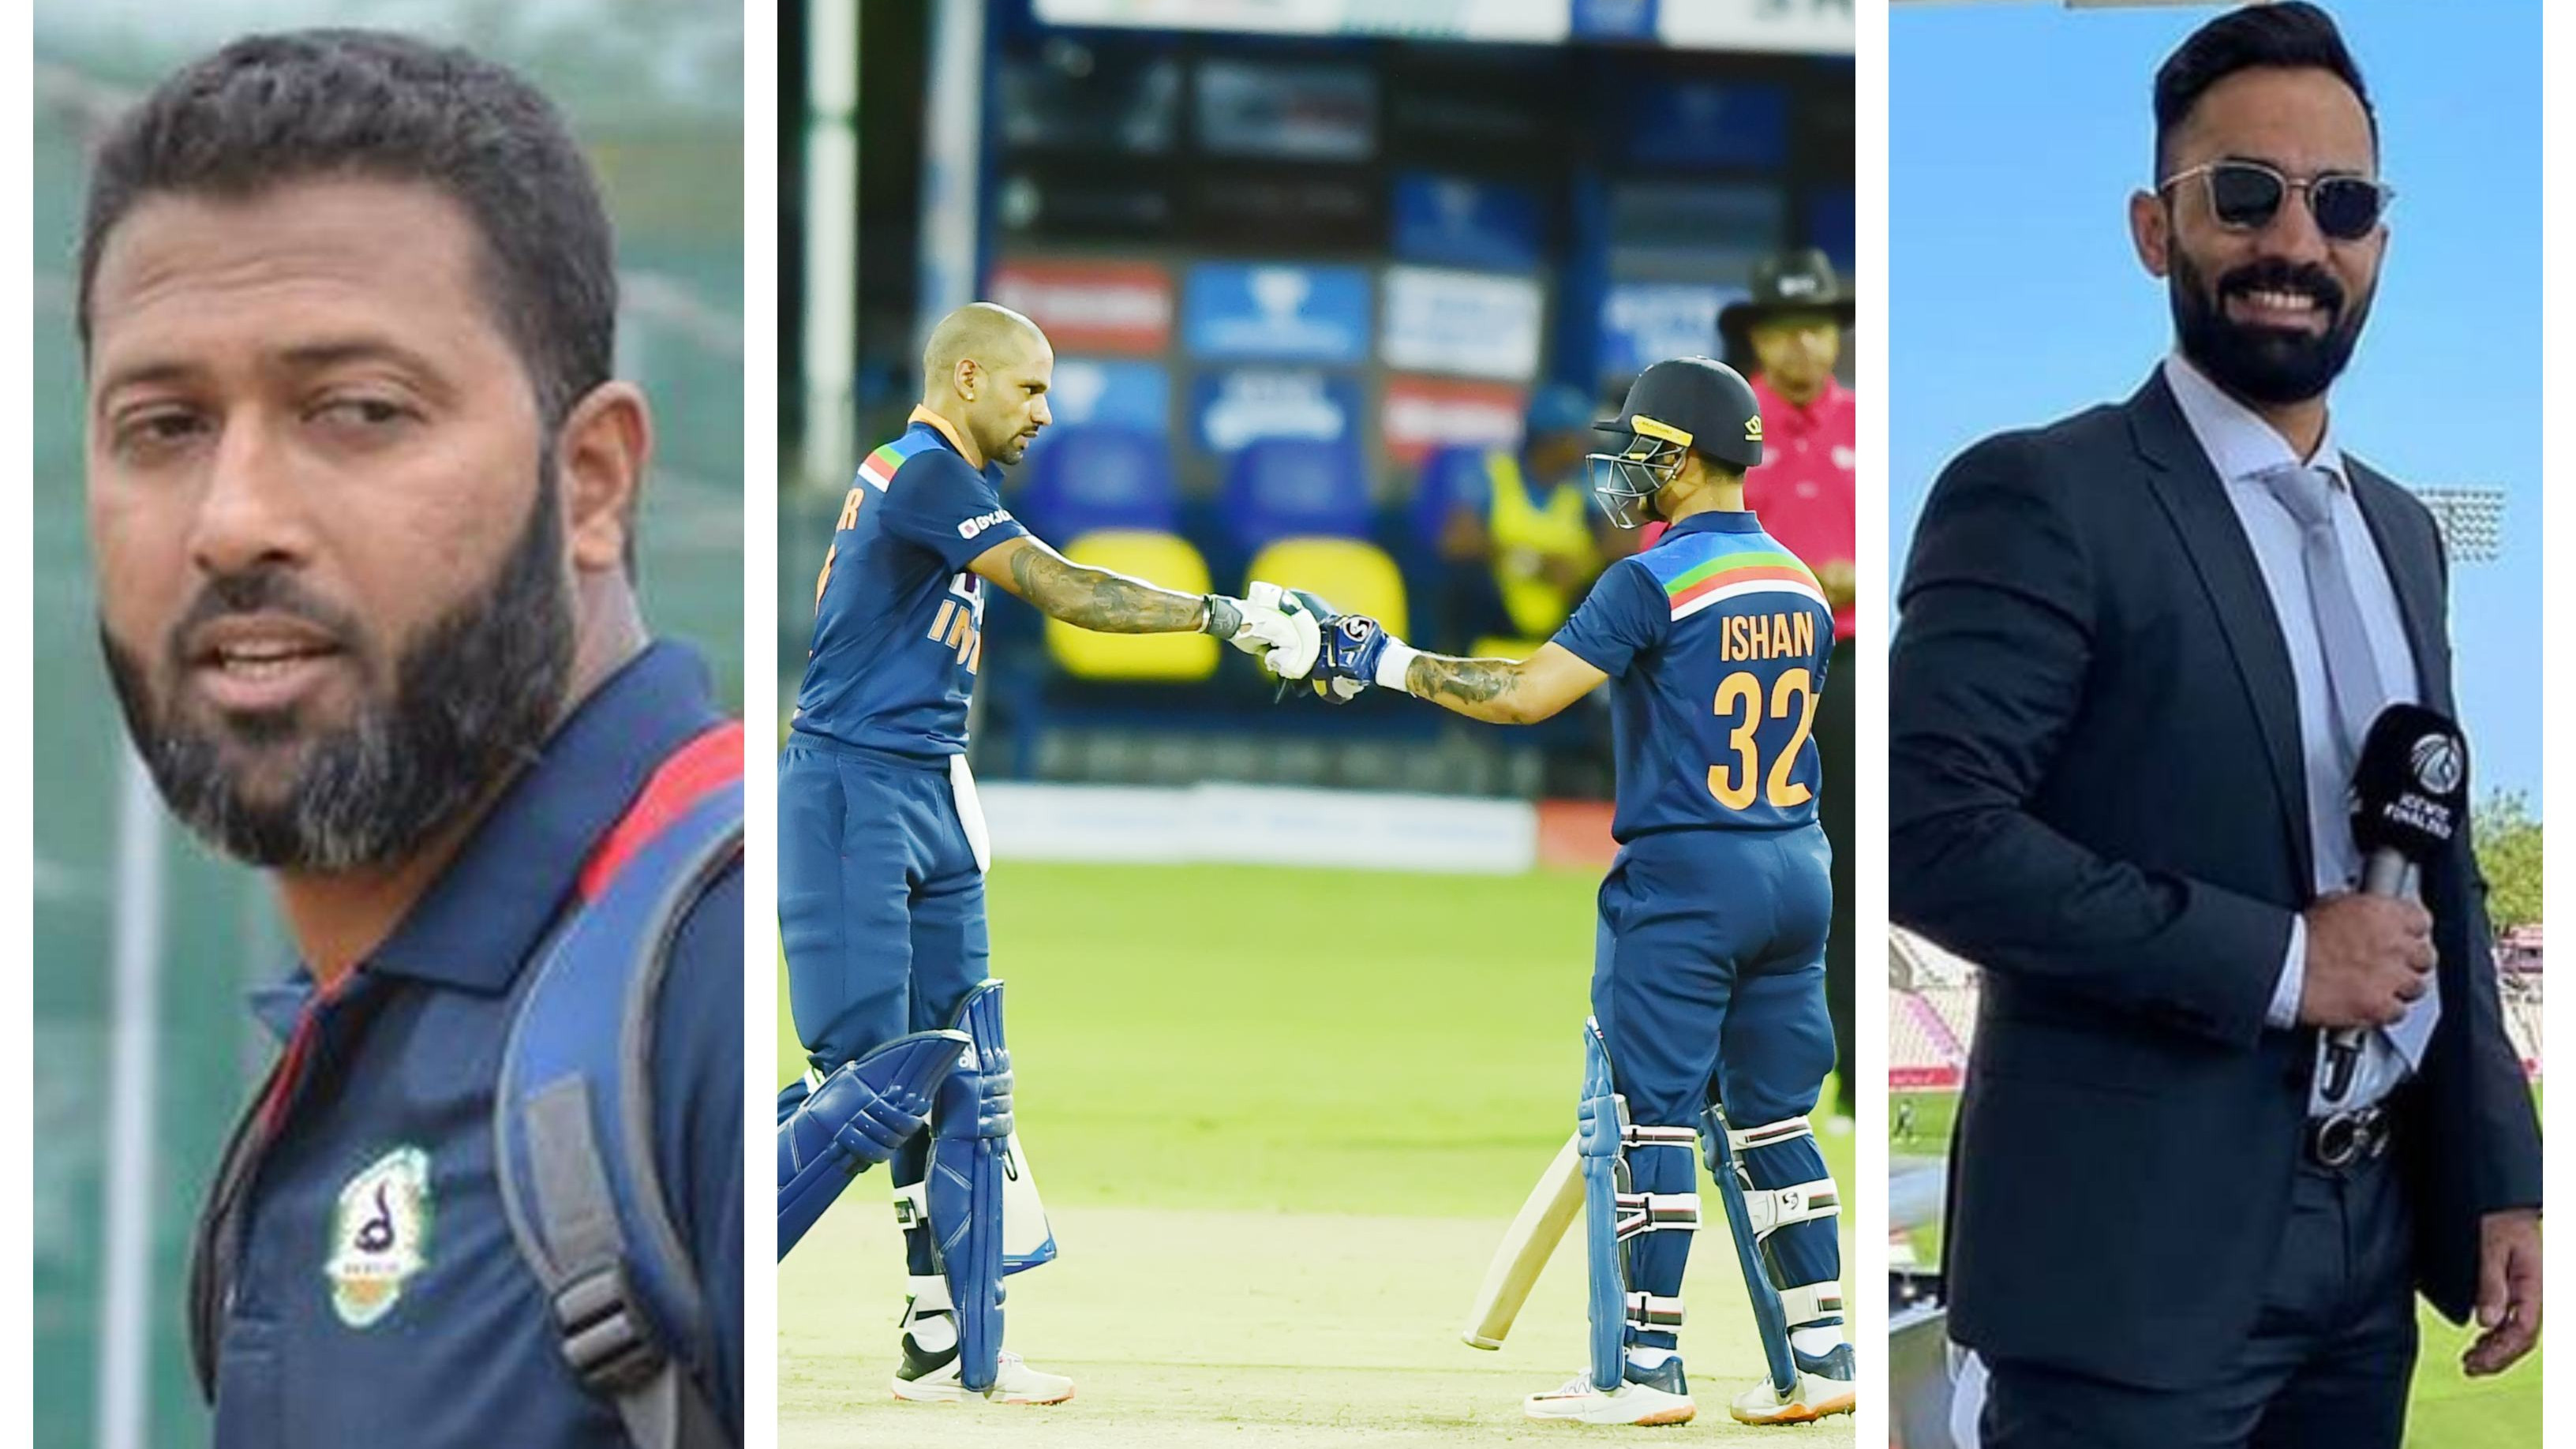 SL v IND 2021: Cricket fraternity reacts as debutant Ishan Kishan, skipper Dhawan slam fifties in India’s big win in 1st ODI